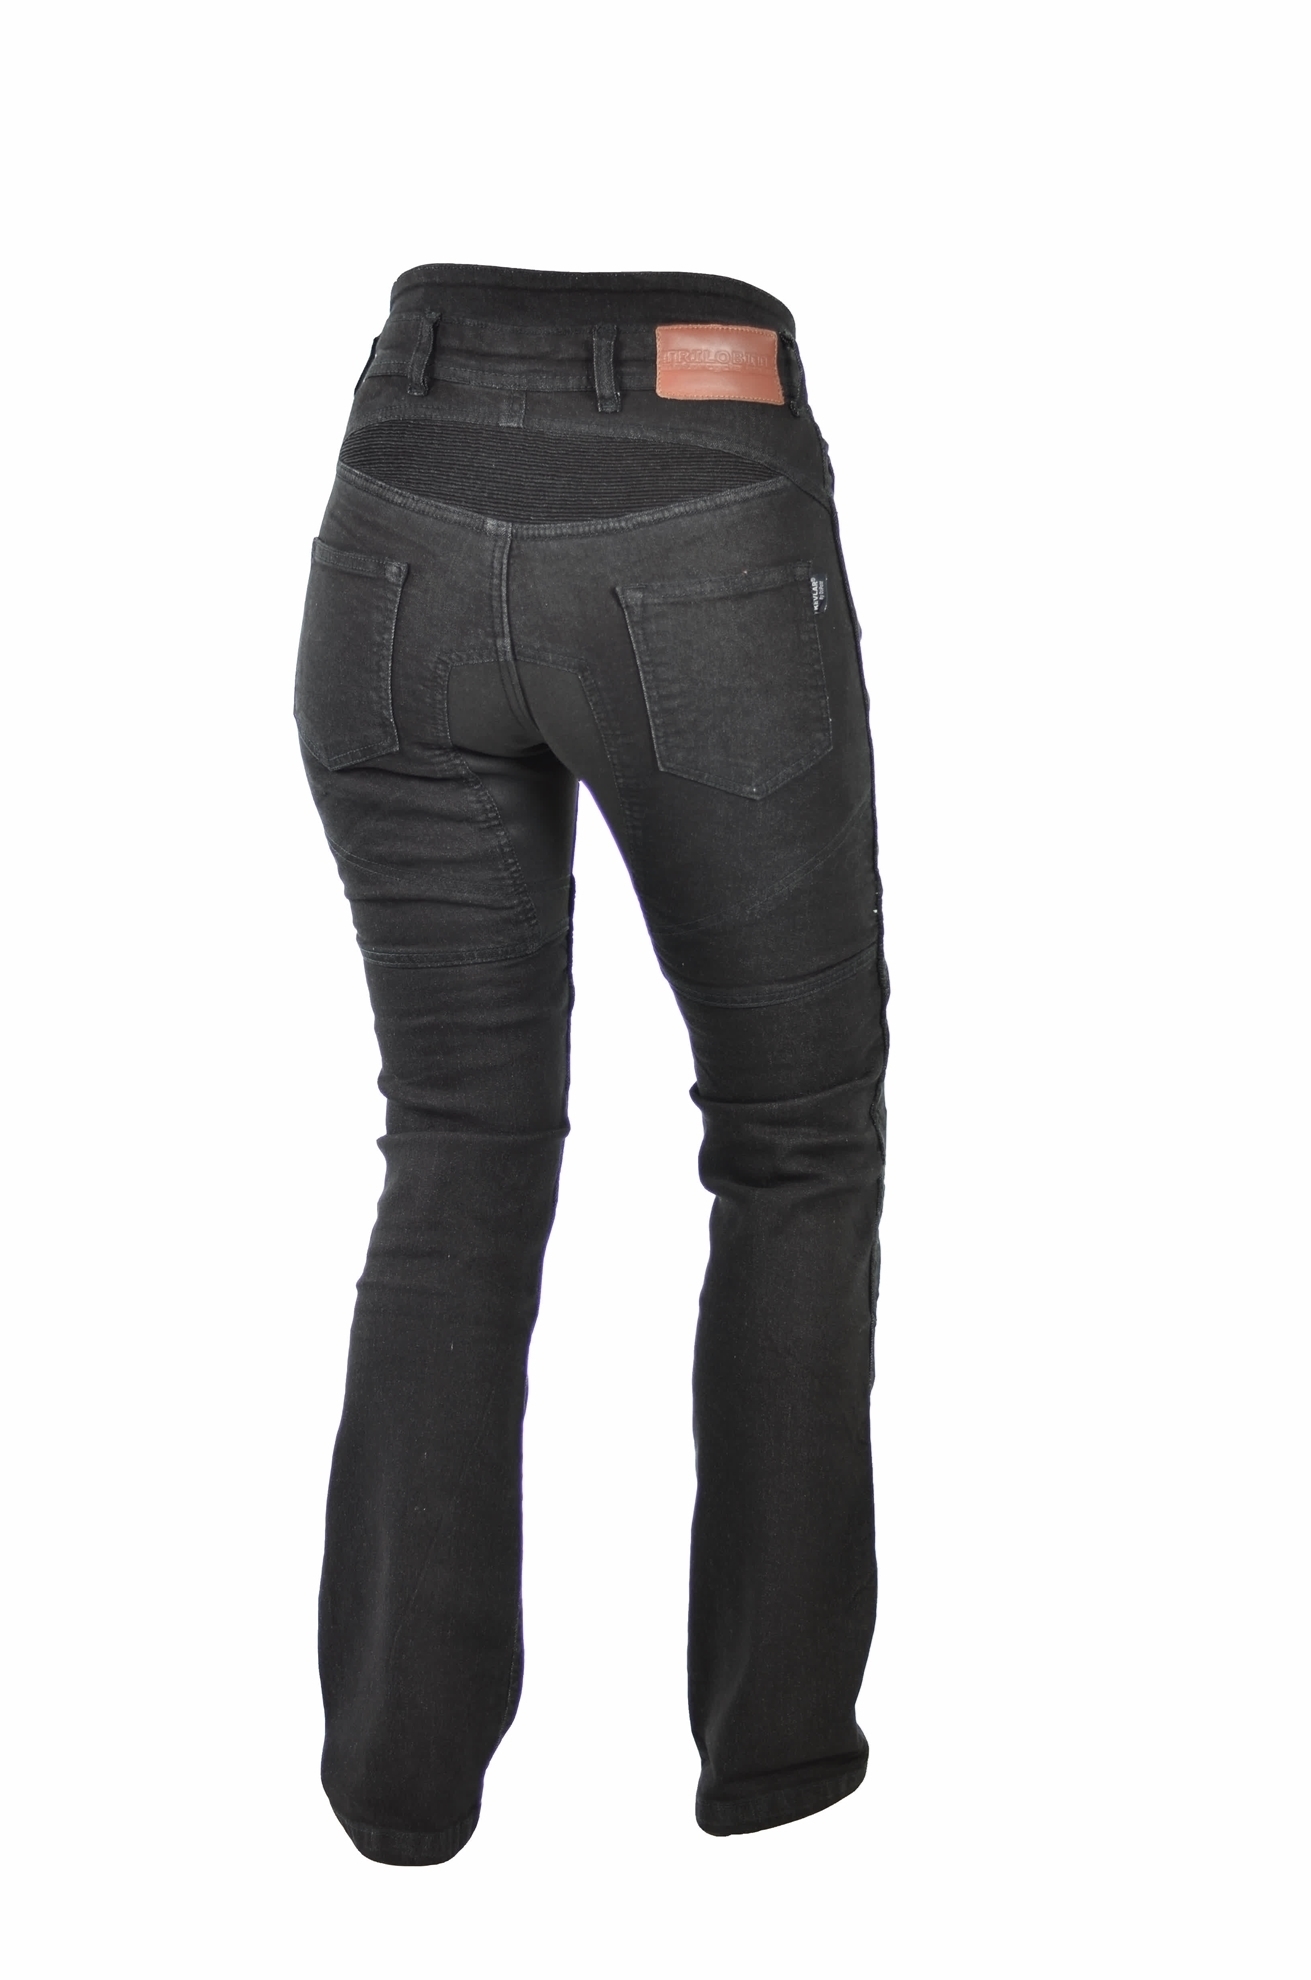 Ženske motoristične jeans hlače Trilobite Parado 661 - regular fit, črne